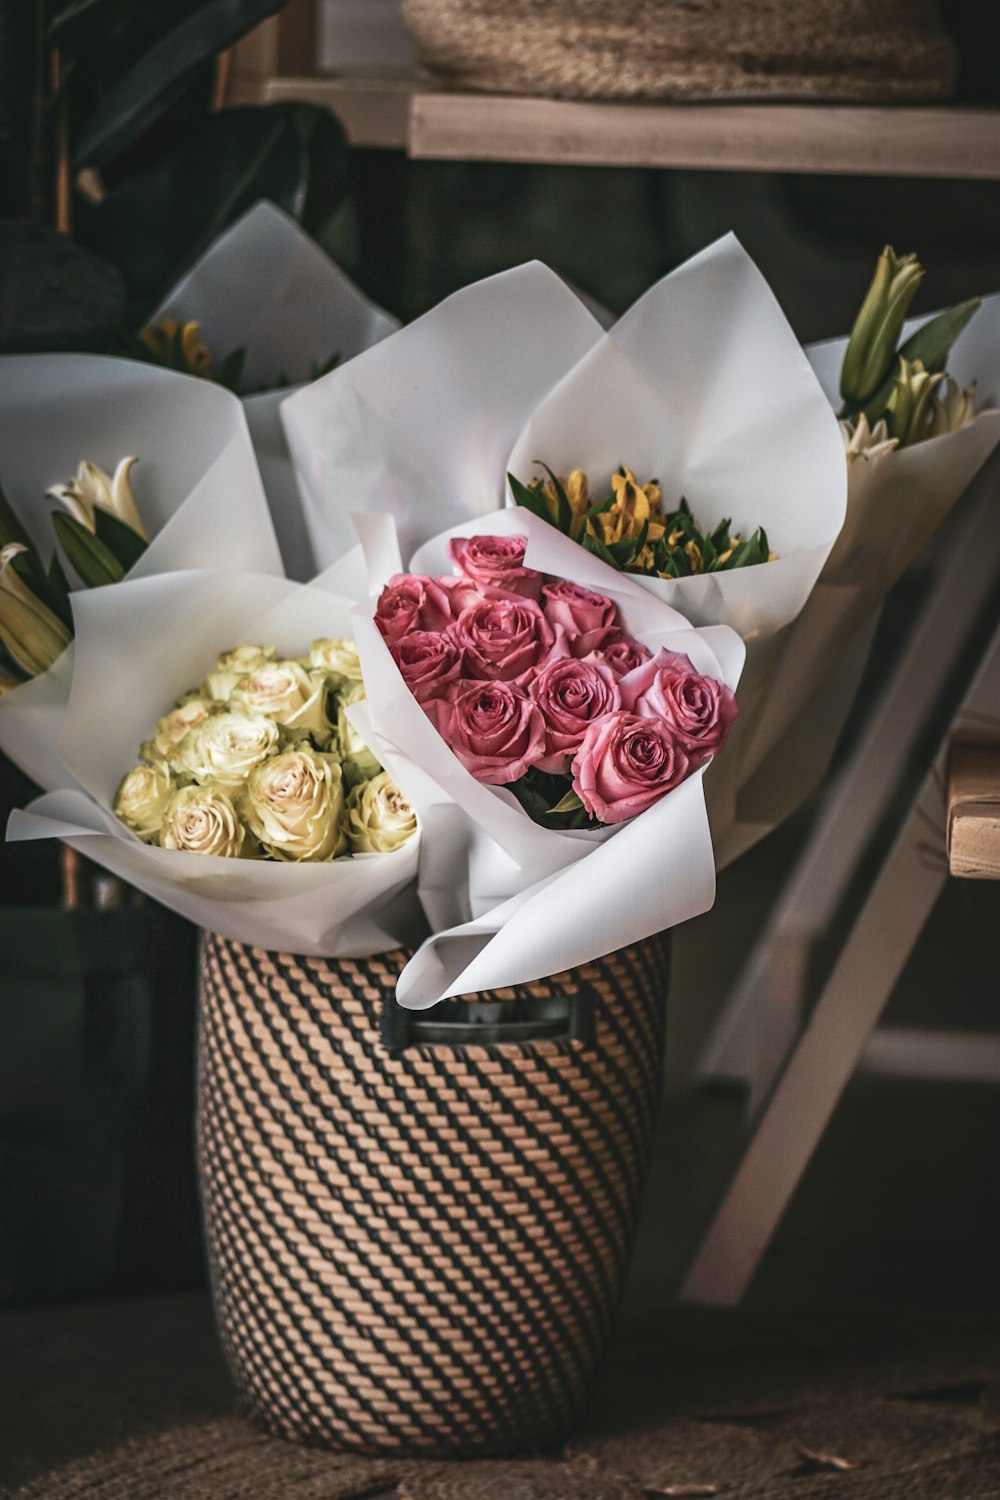 assorted flower bouquet lot in basket